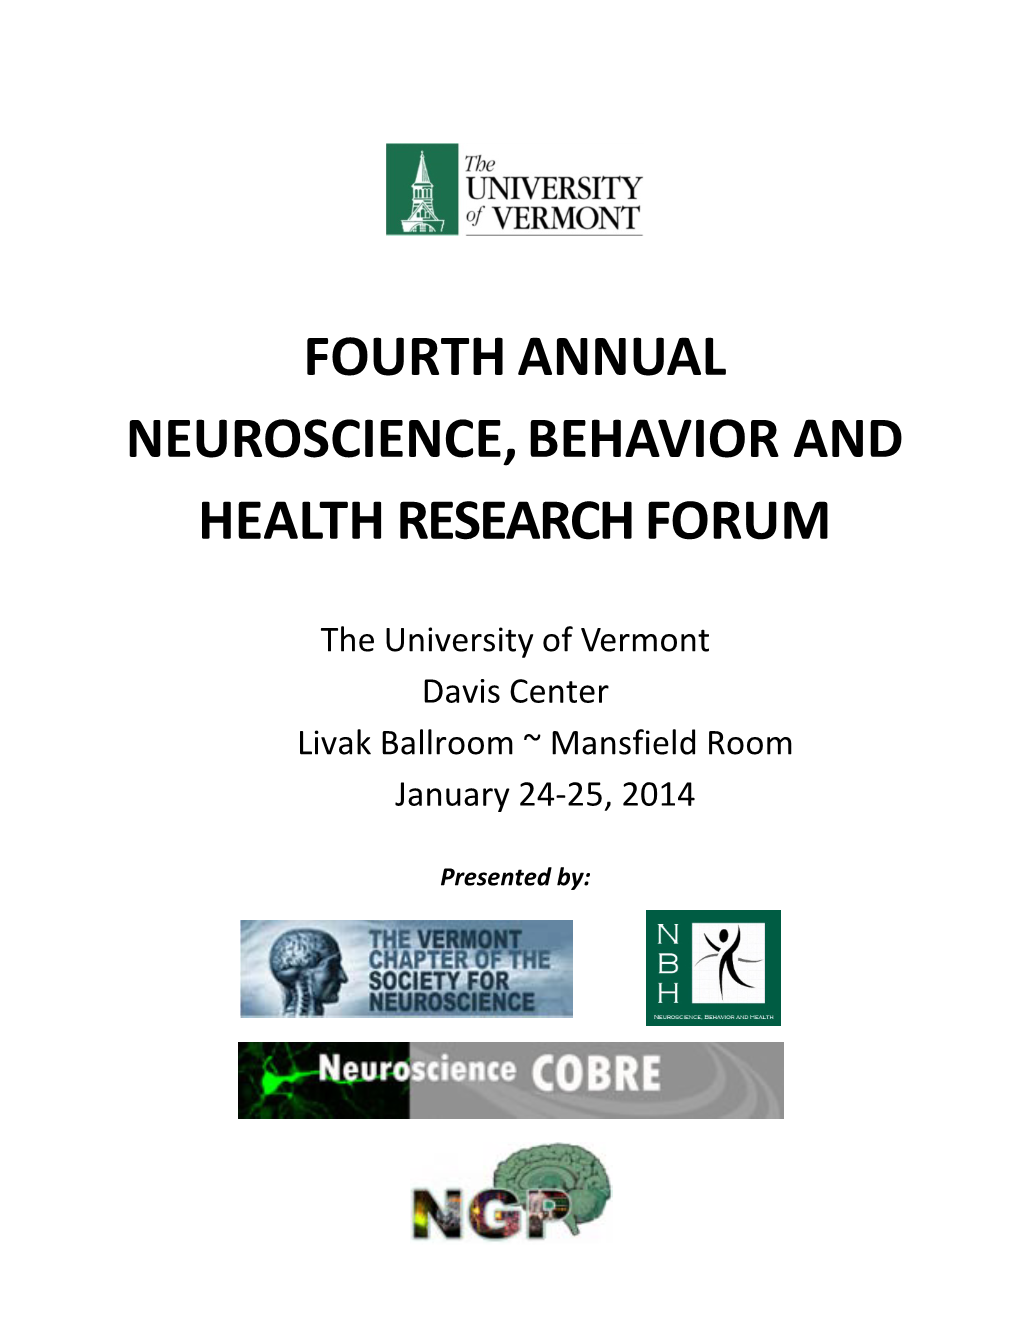 Fourth Annual Neuroscience, Behavior and Health Research Forum